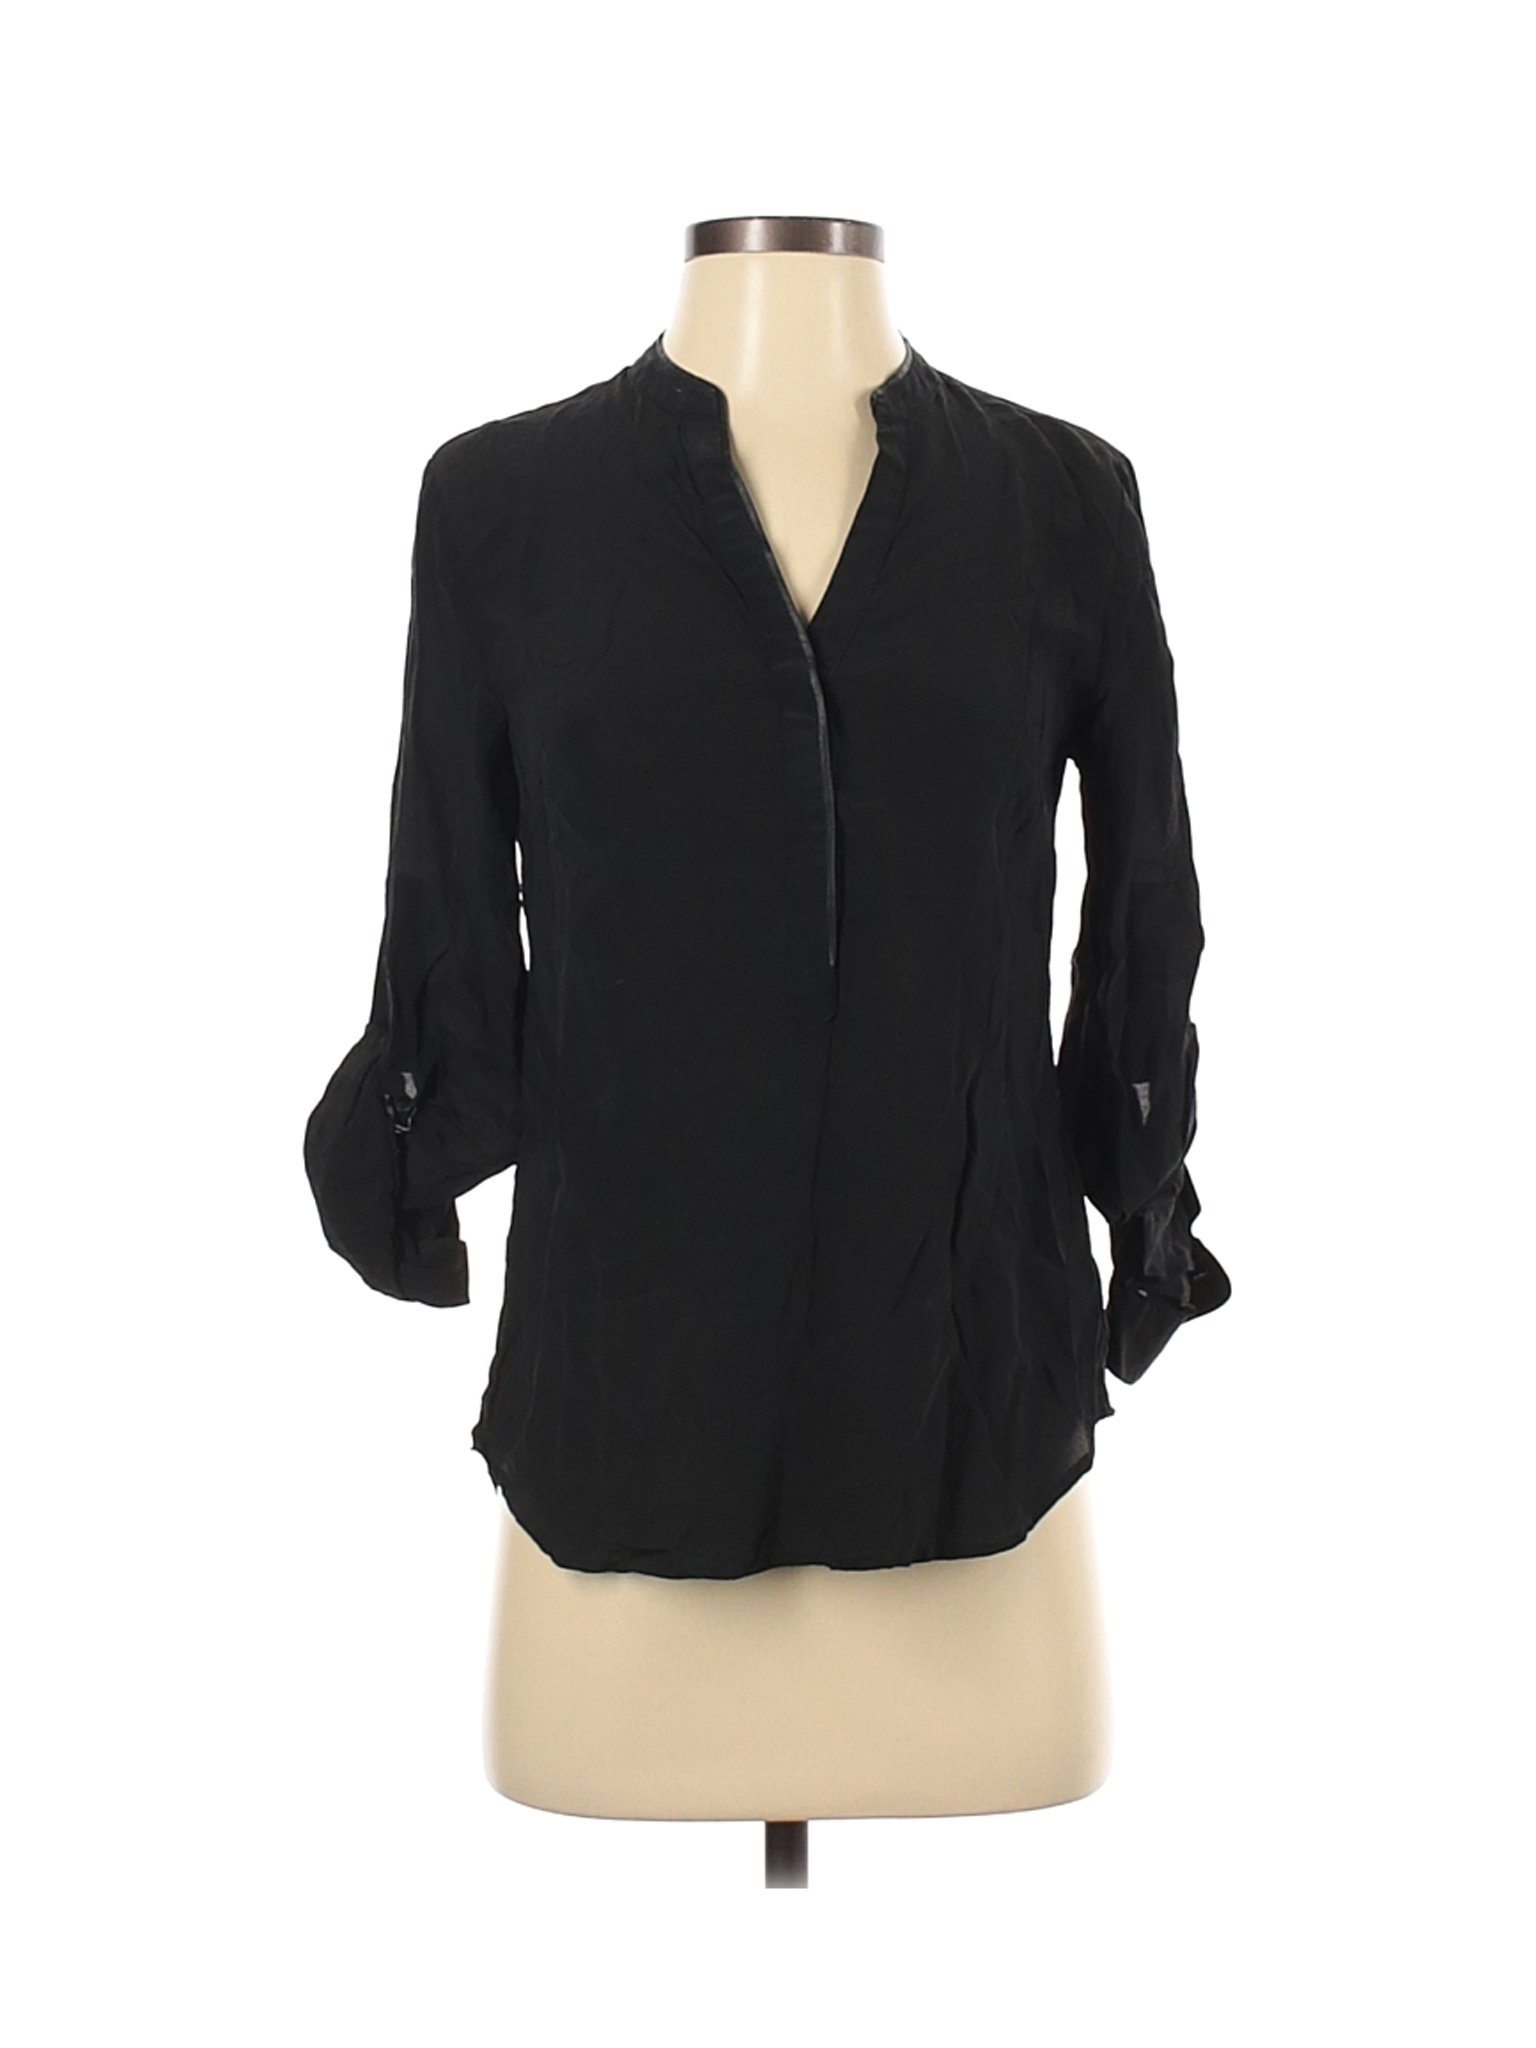 Banana Republic Women Black Long Sleeve Silk Top XS | eBay